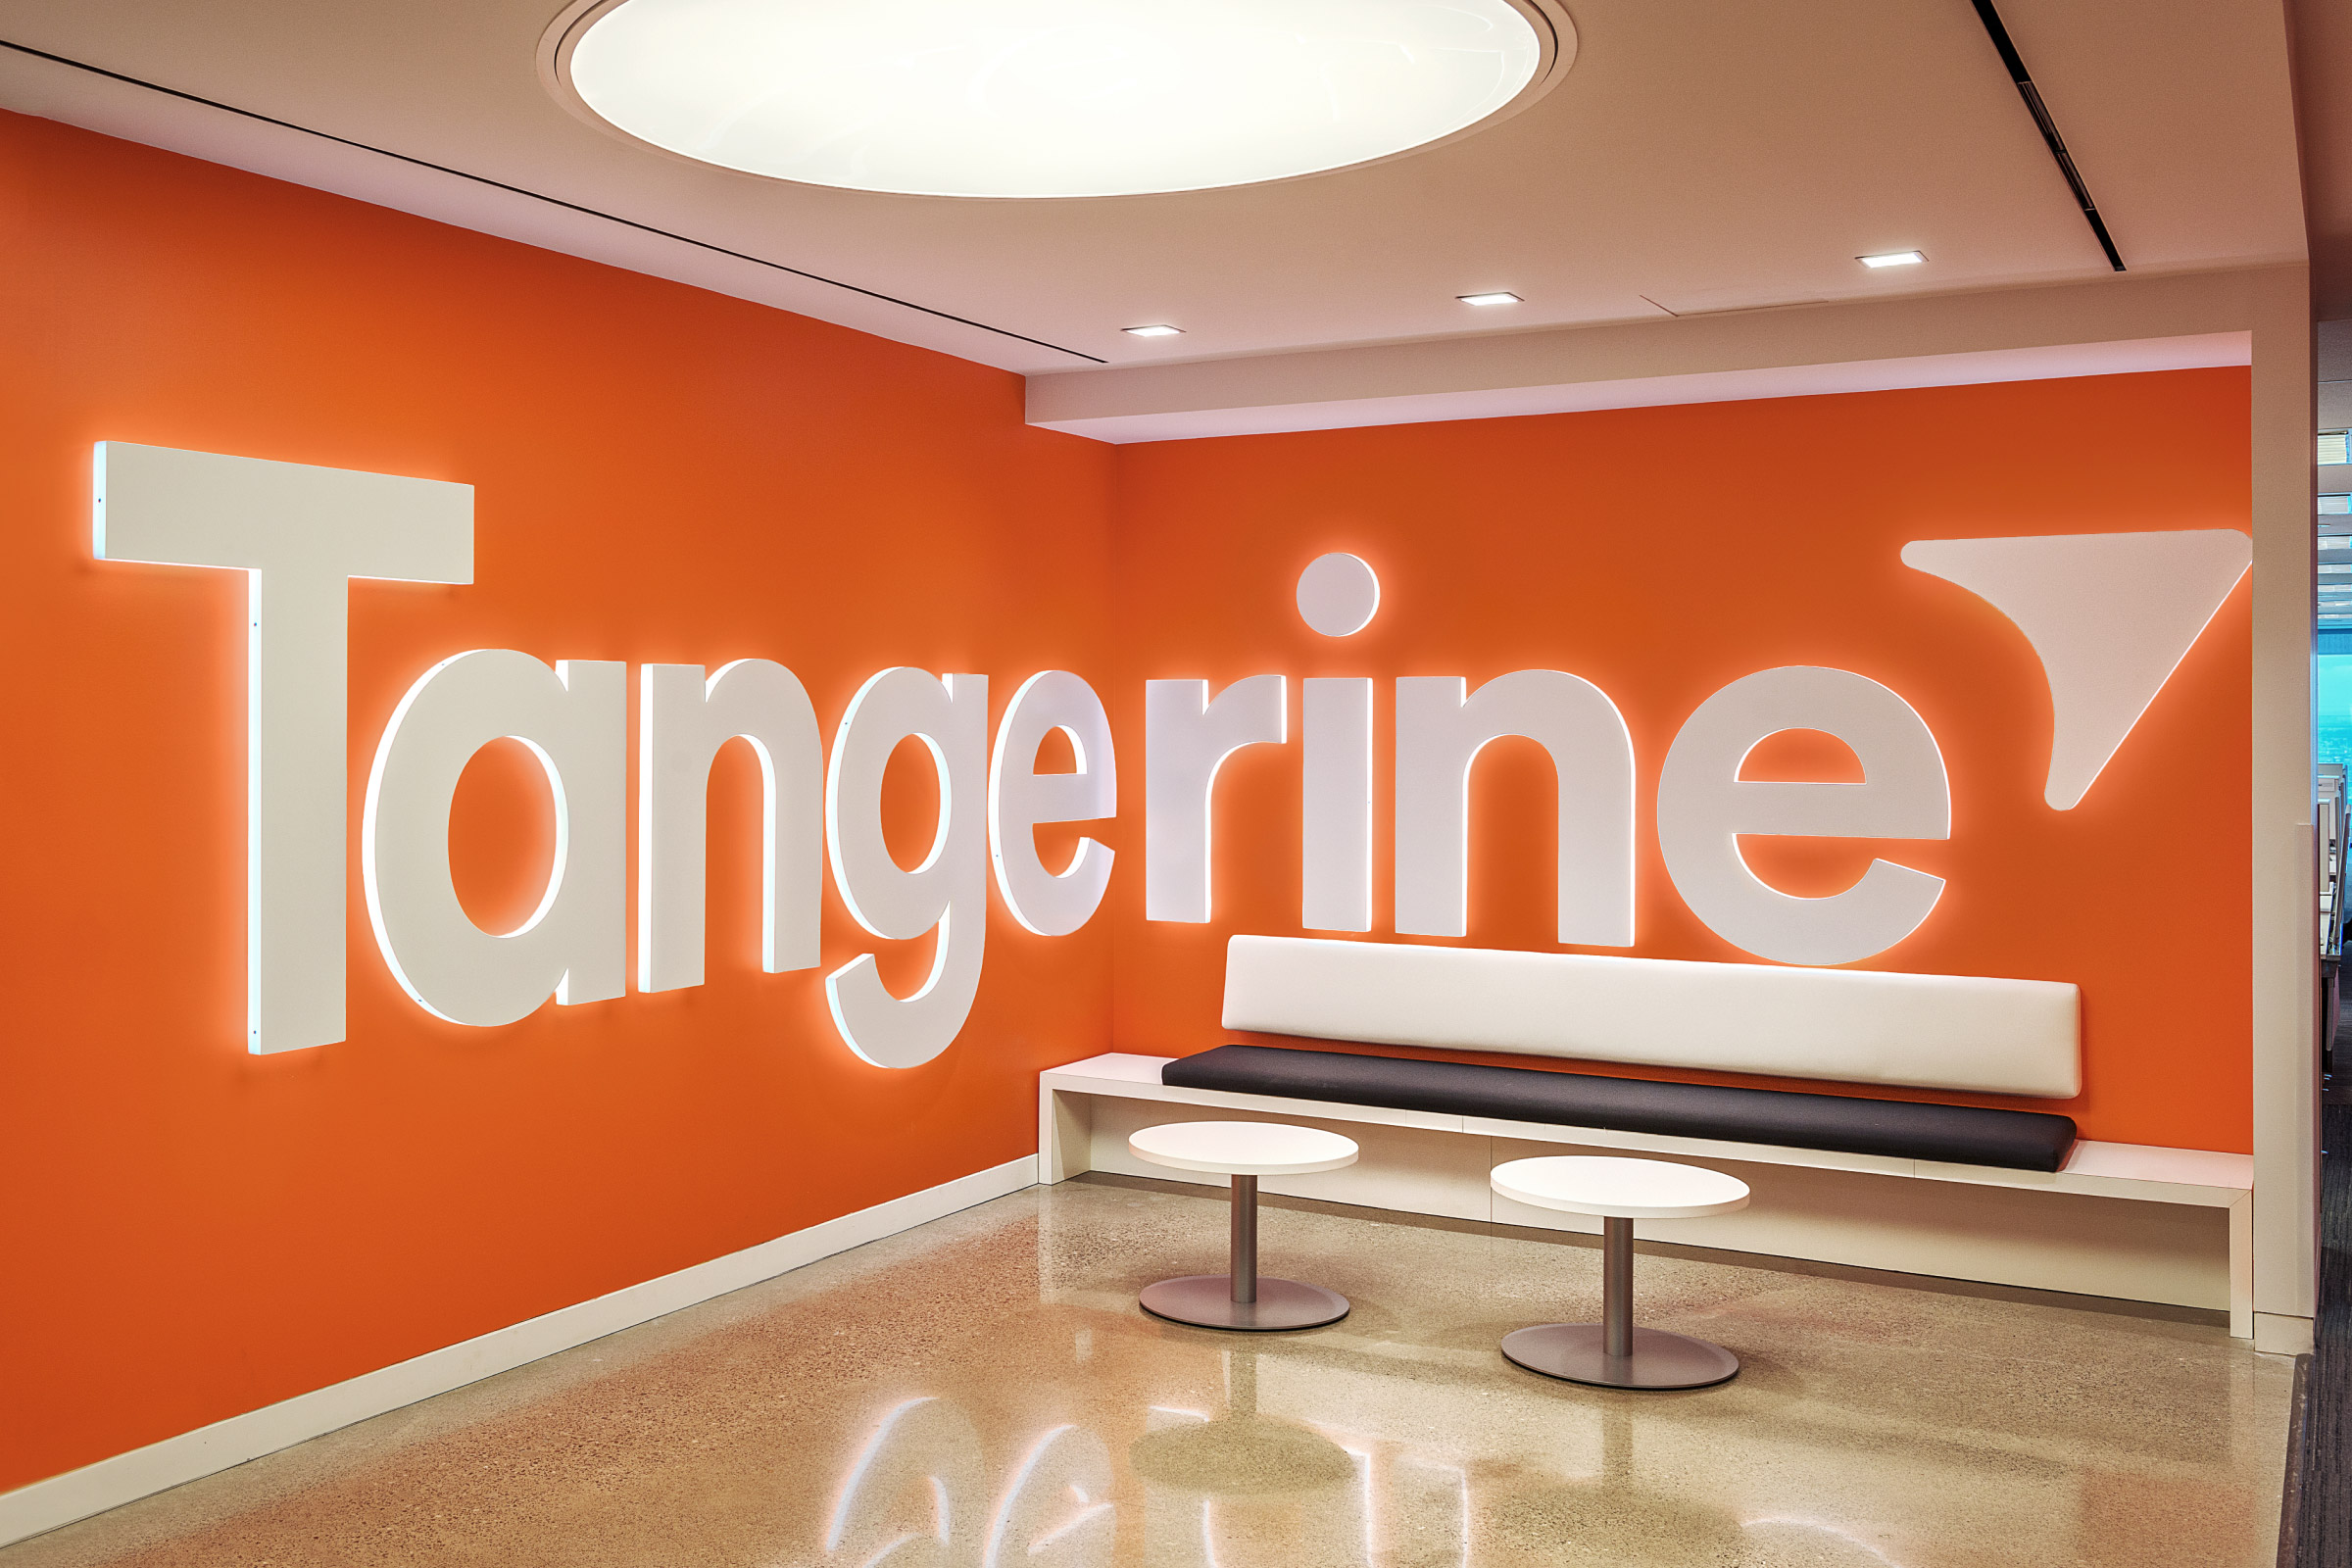 https://images.prismic.io/concrete-production/bdf78dbe-c4b7-4401-a176-c17b51688be4_Concrete+-+Tangerine+Interiors+-+Large+Logo+Signage+Installation.jpg